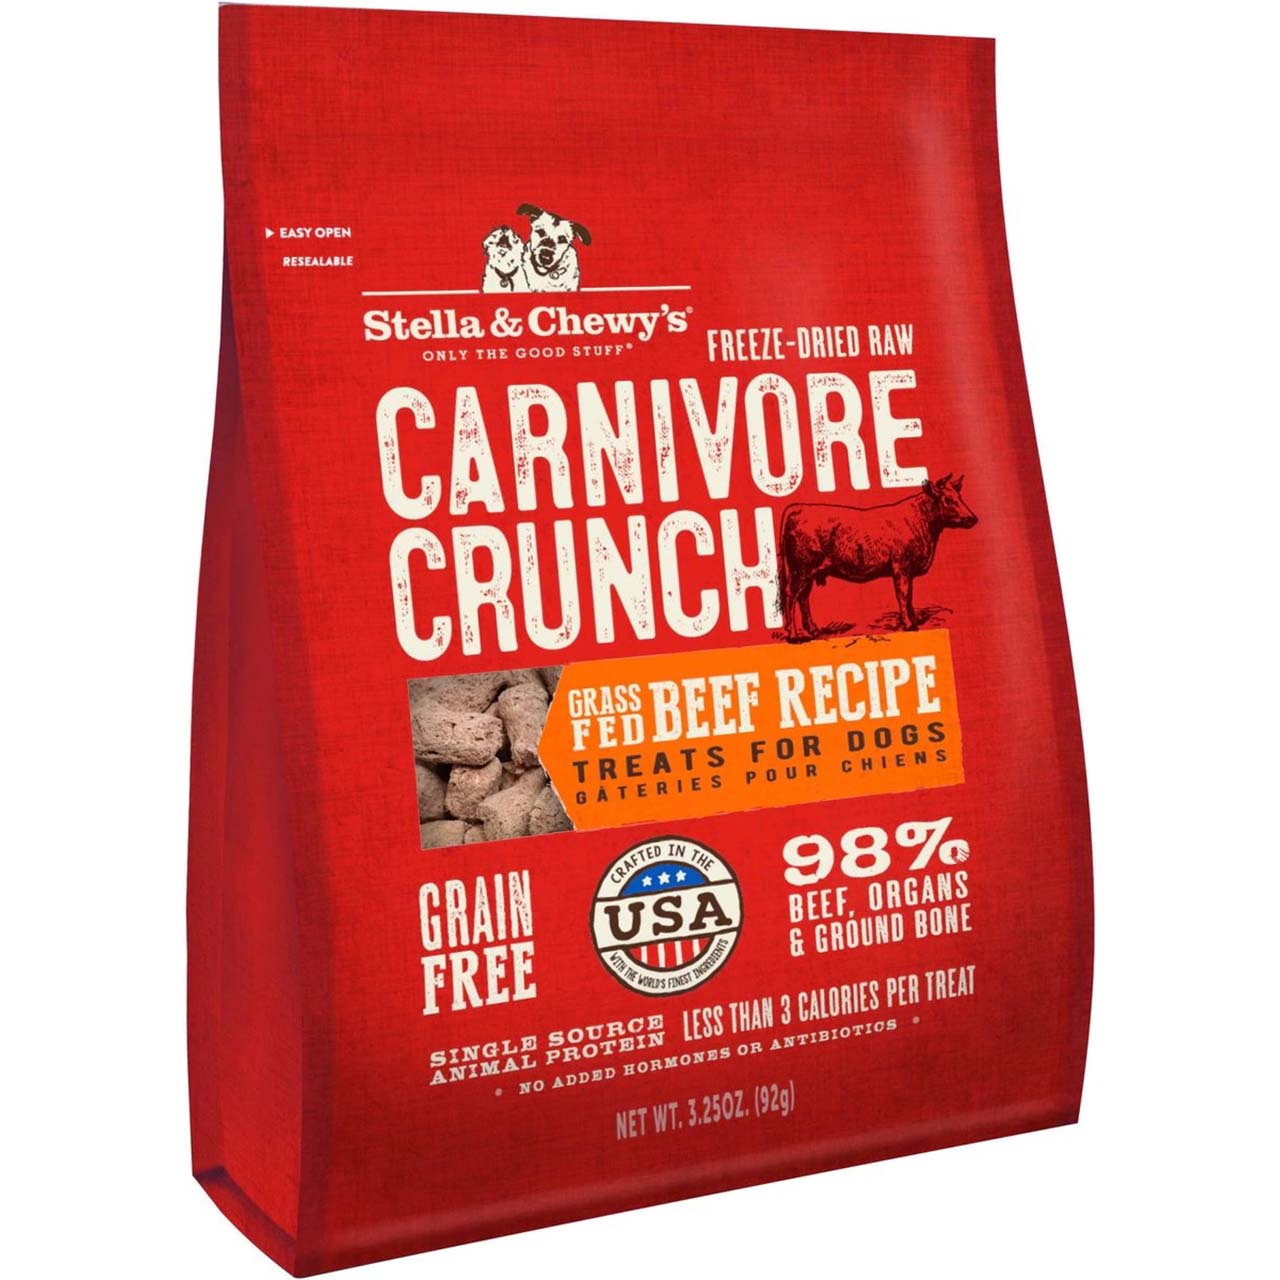 Carnivore Crunch Grass-Fed Beef Recipe Freeze-Dried Raw Dog Treats